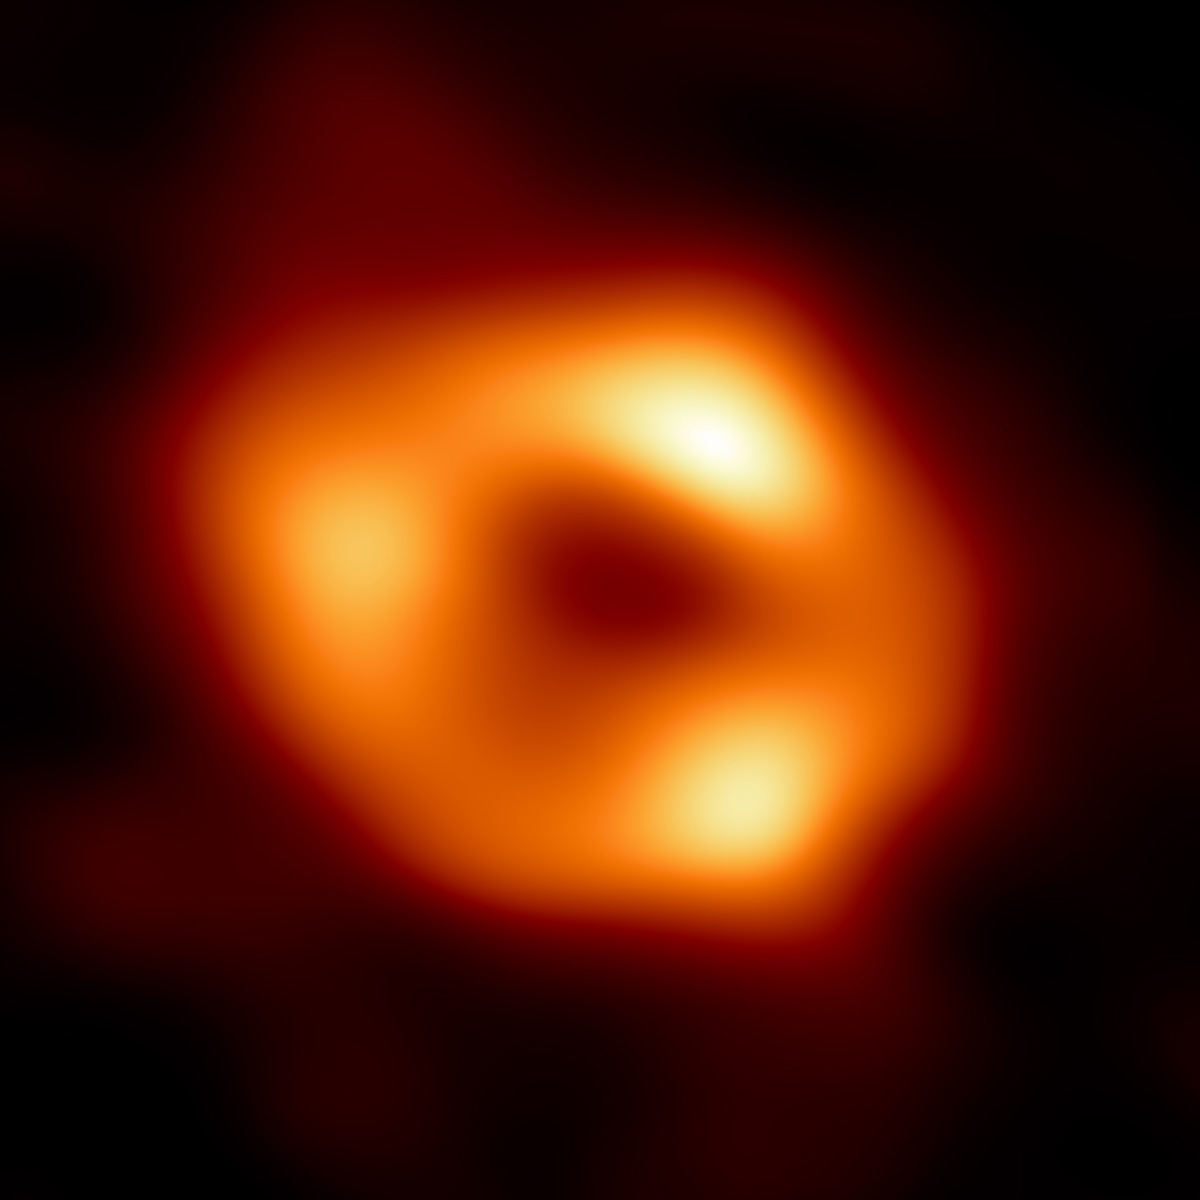 The Sagittarius A* black_hole